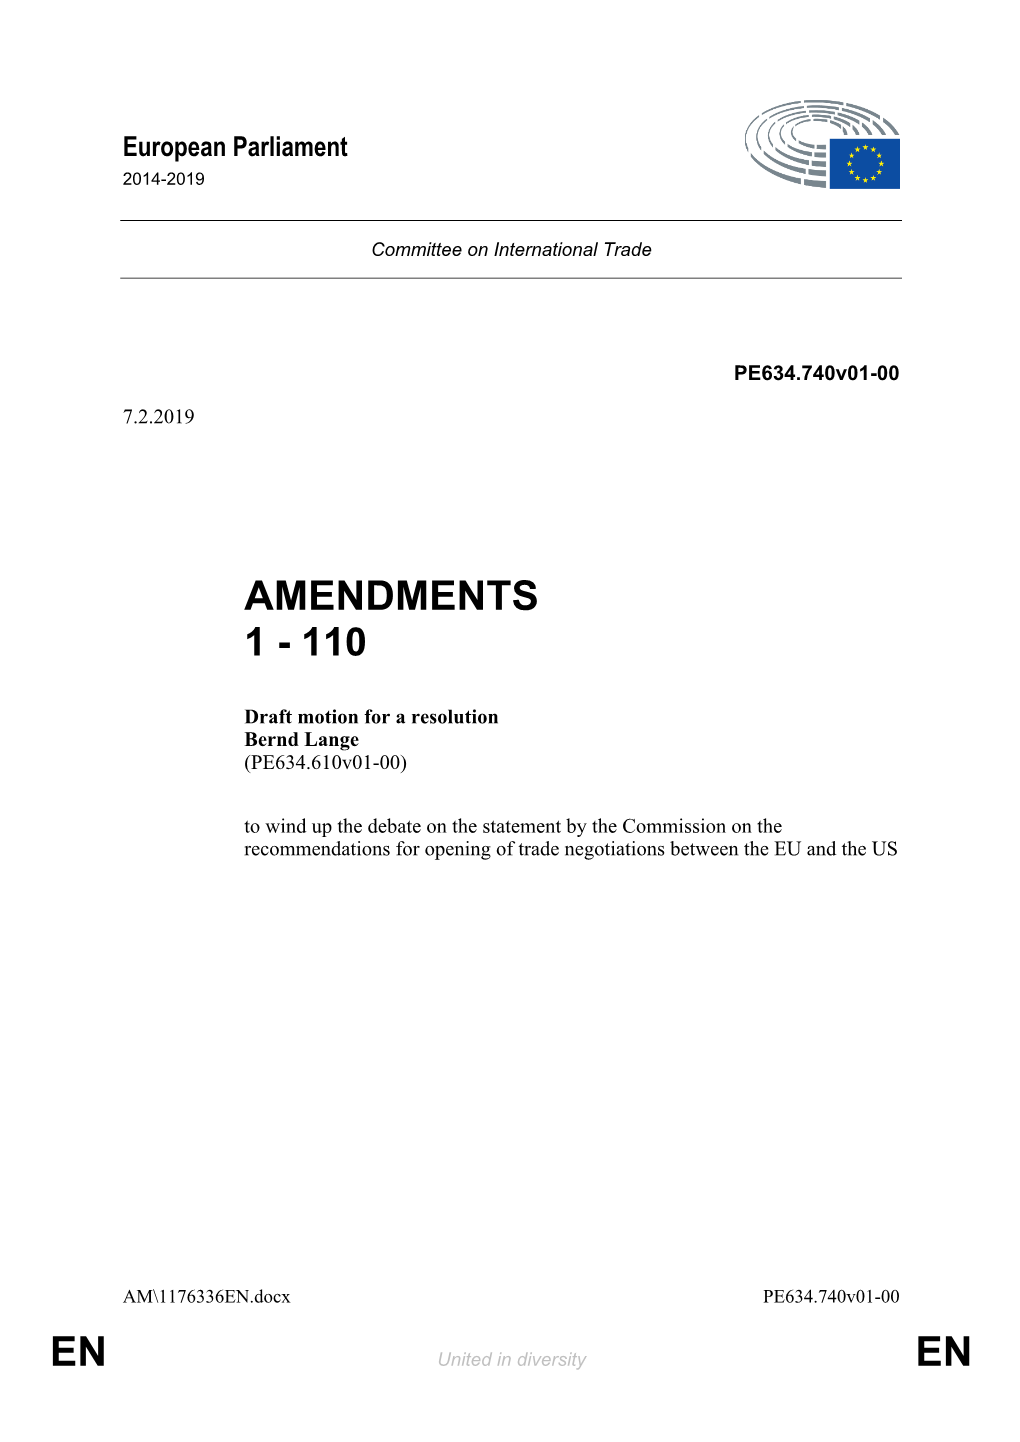 Amendments-Report-Lange[2]